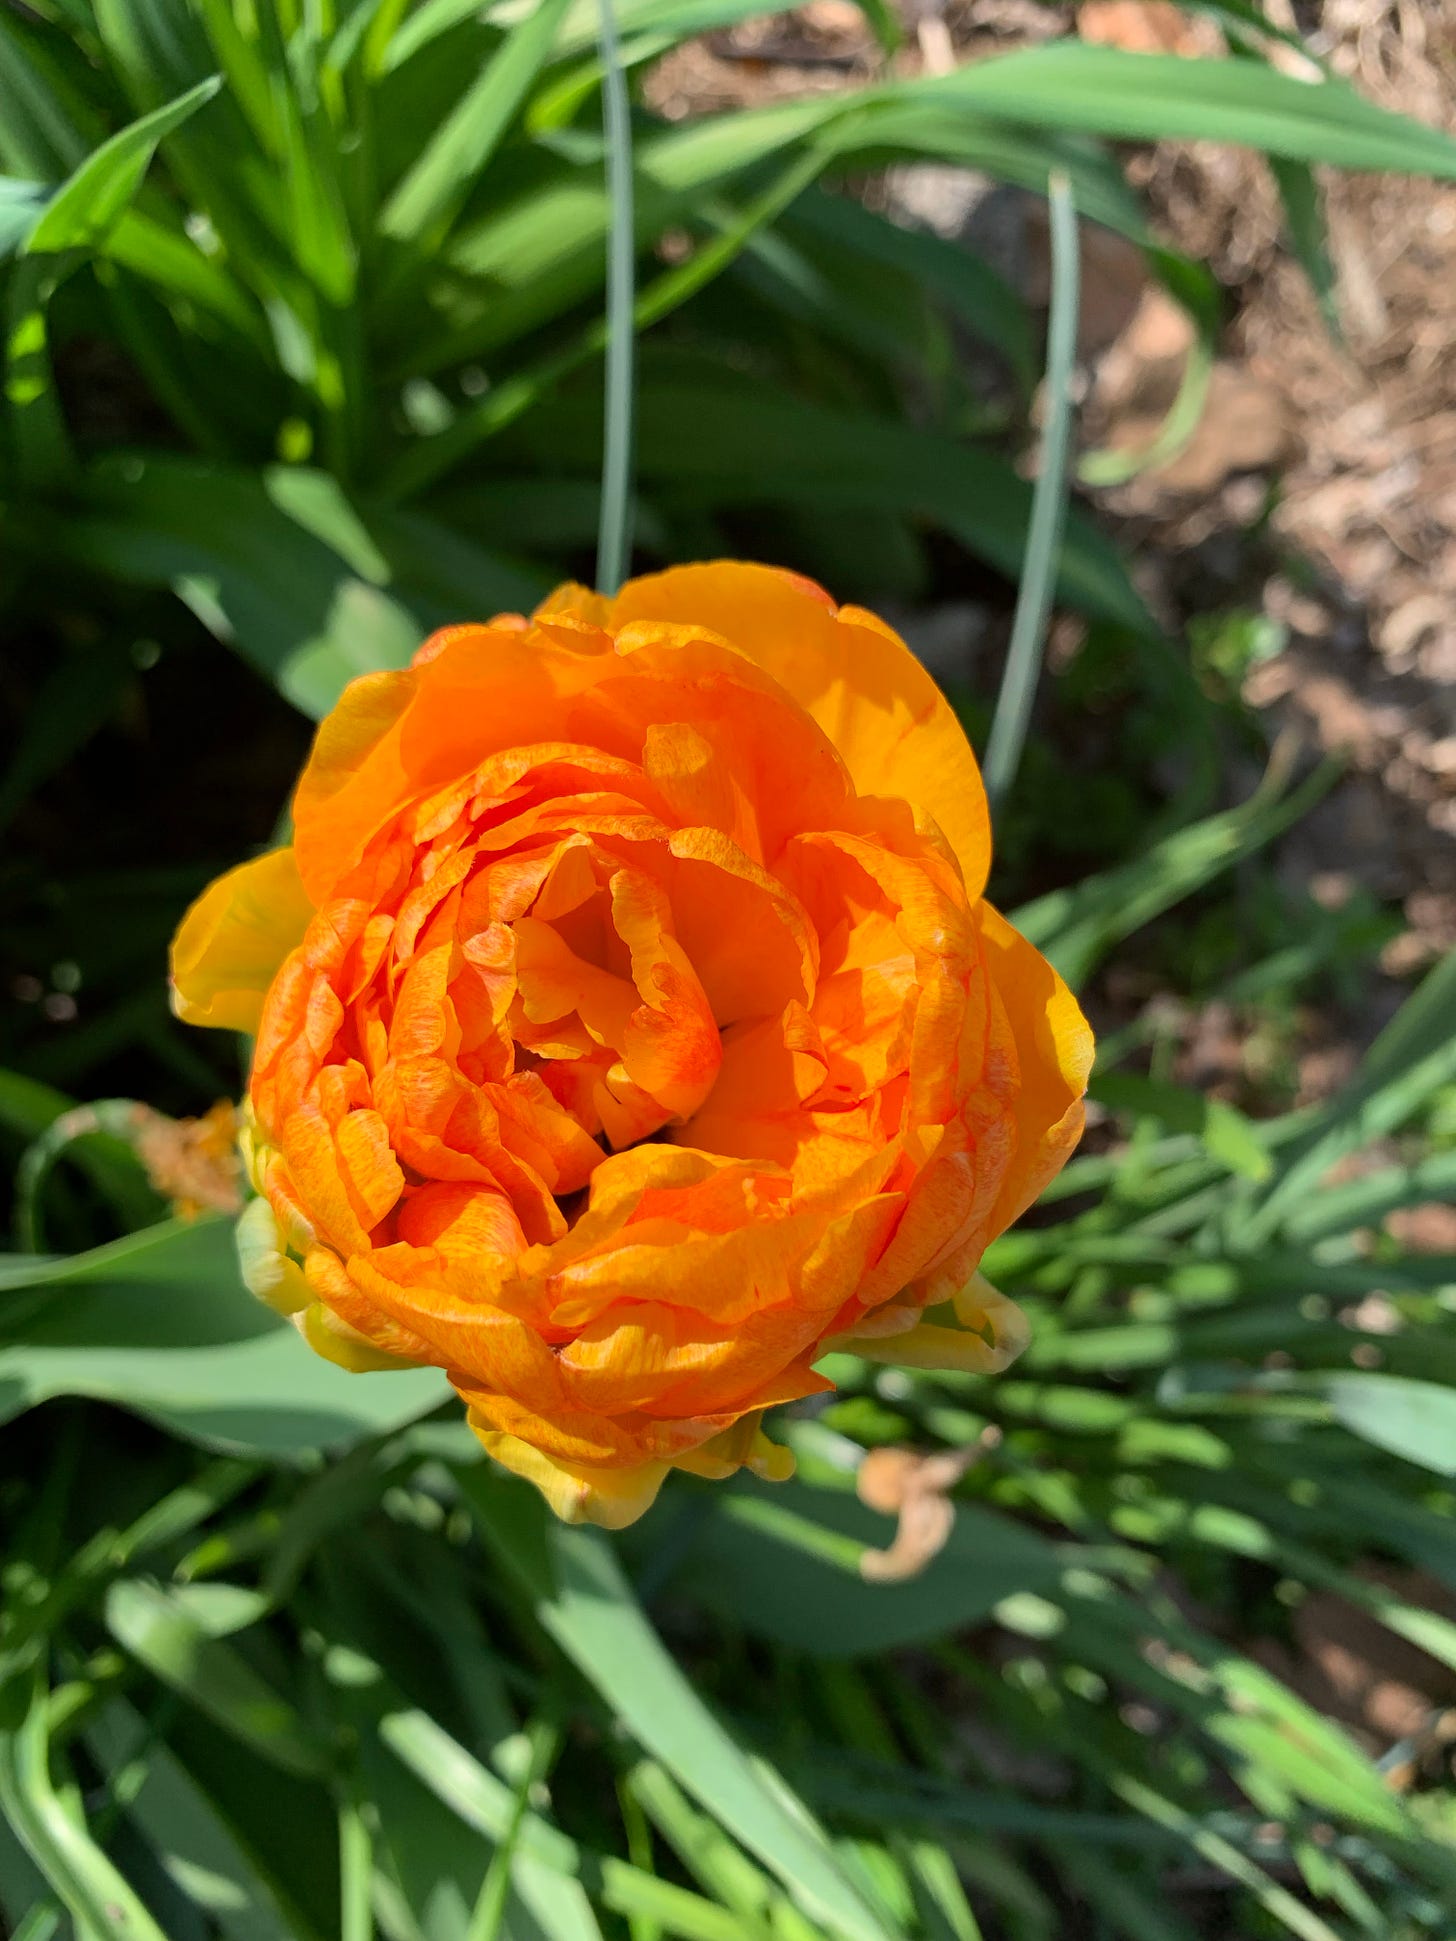 An orange tulip that looks more like a raununculus